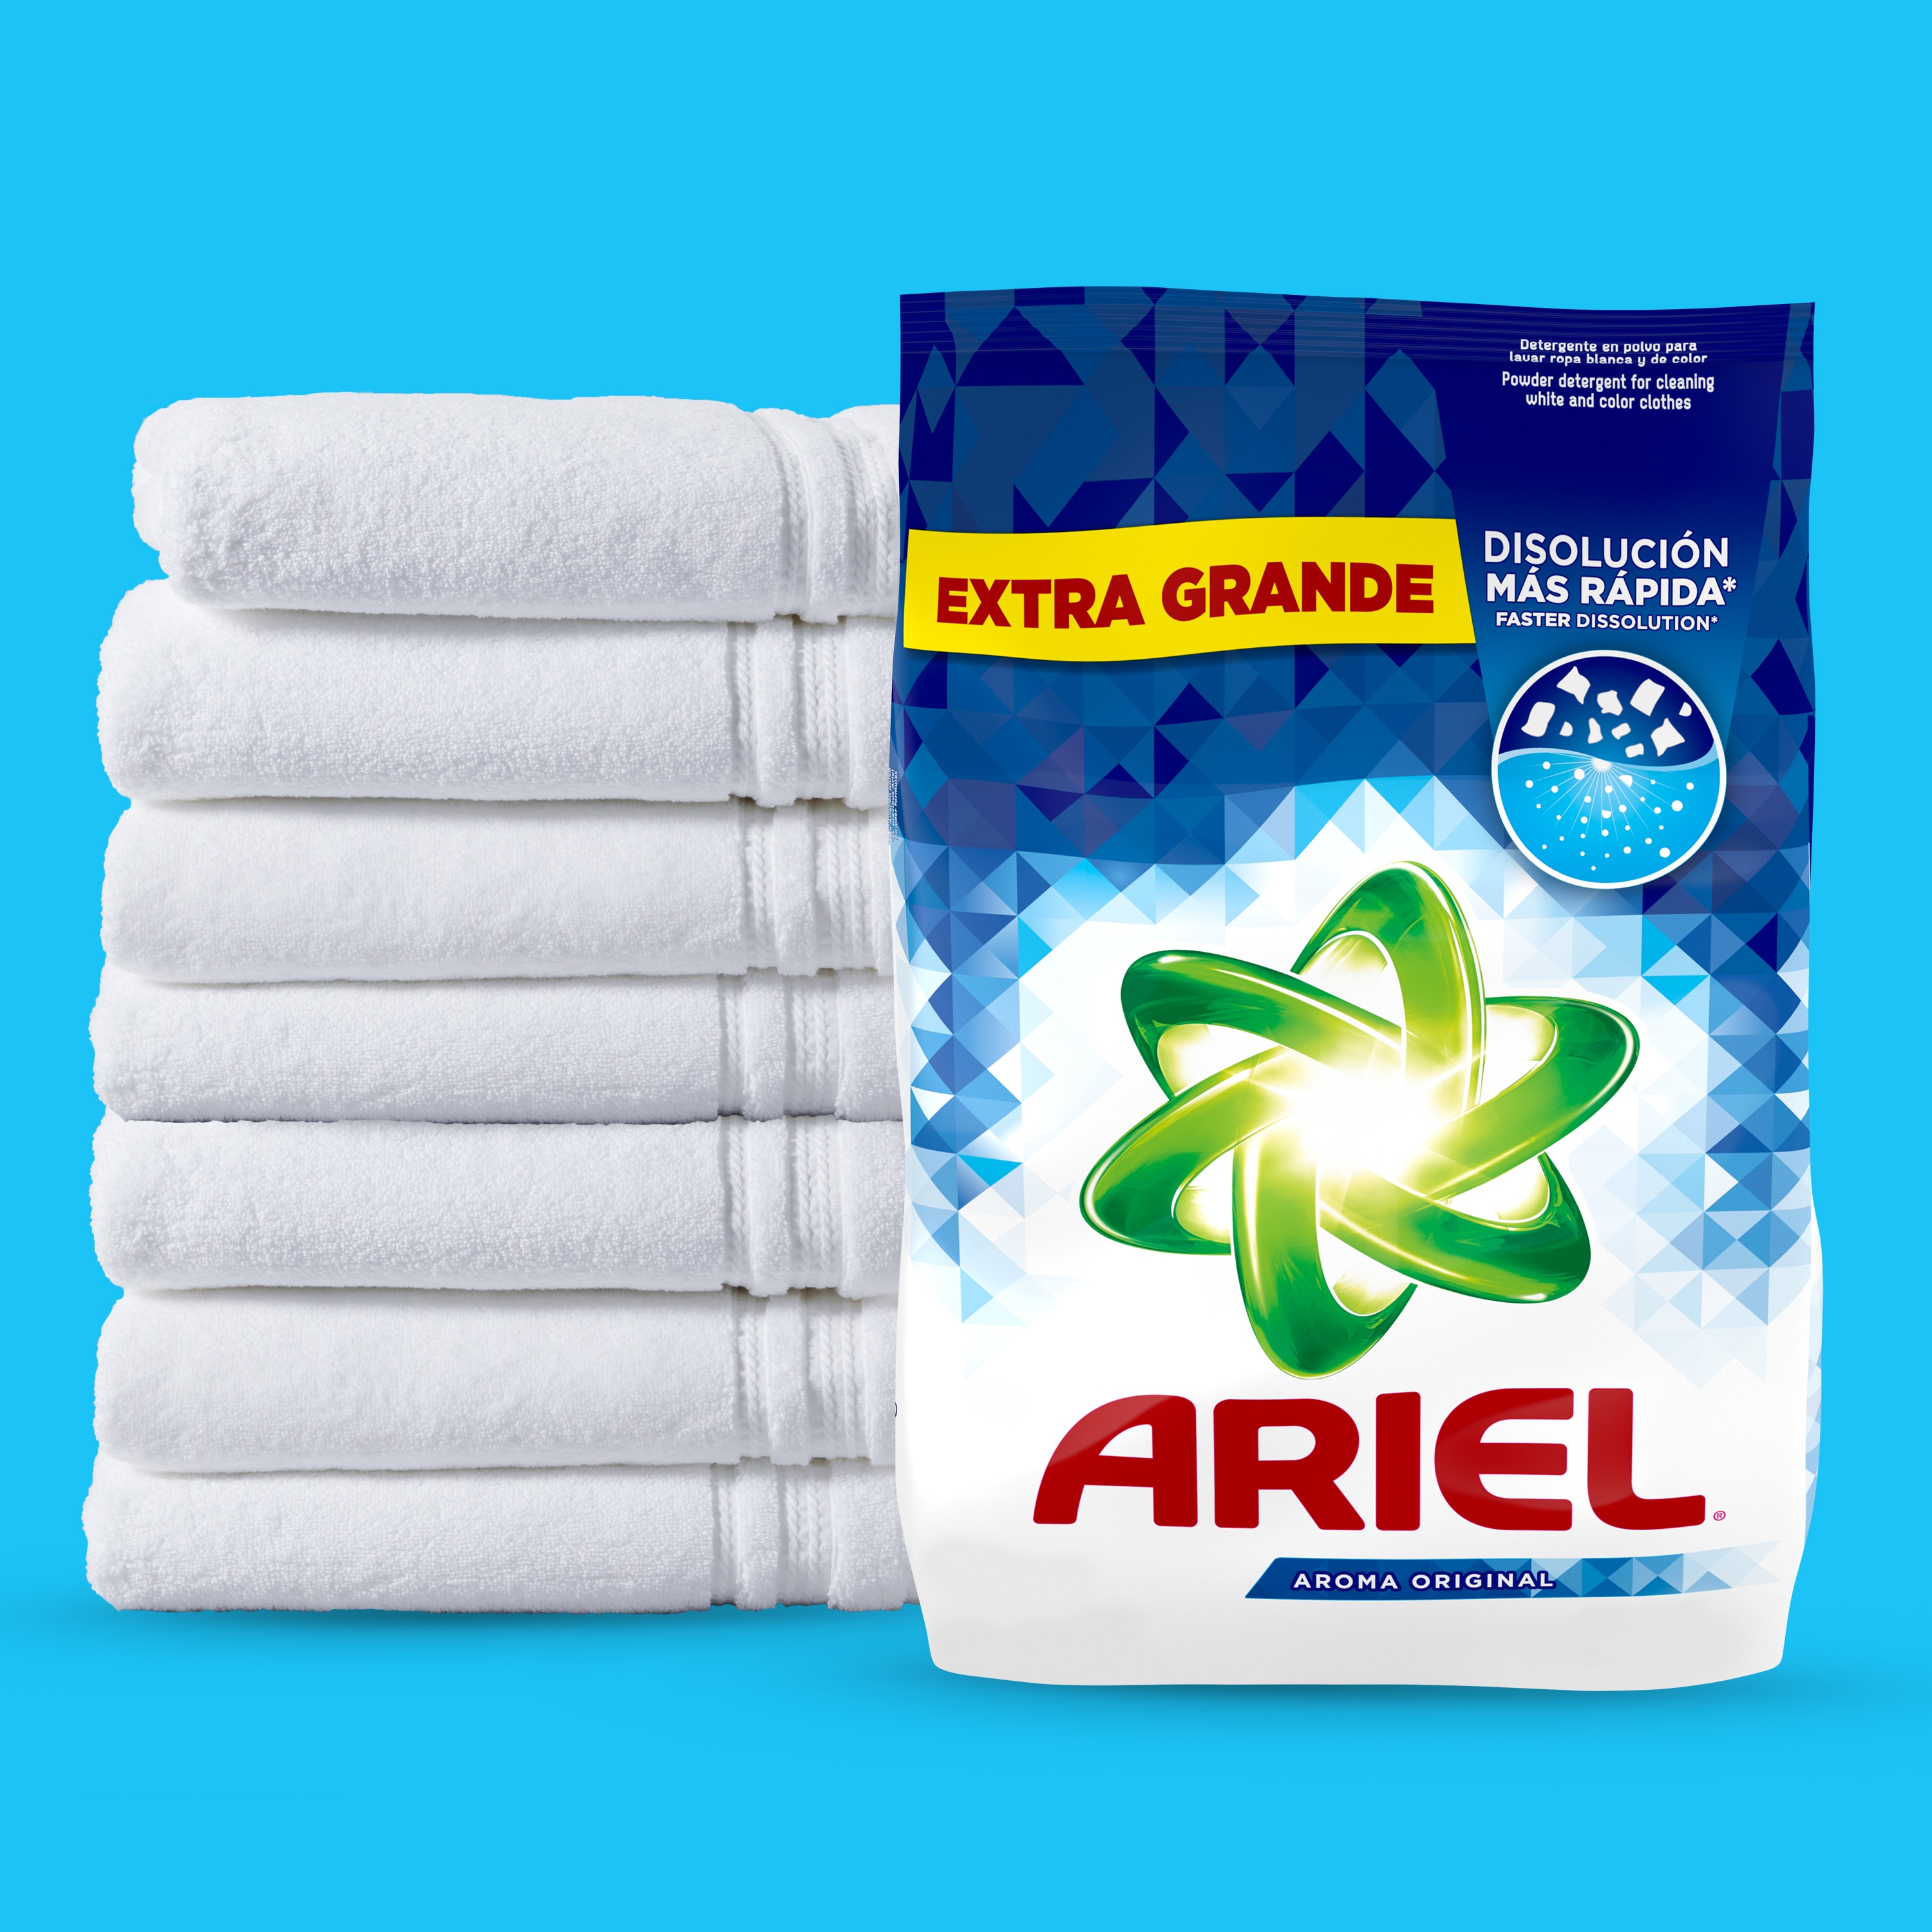 Ariel Detergent 250g Original-wholesale 